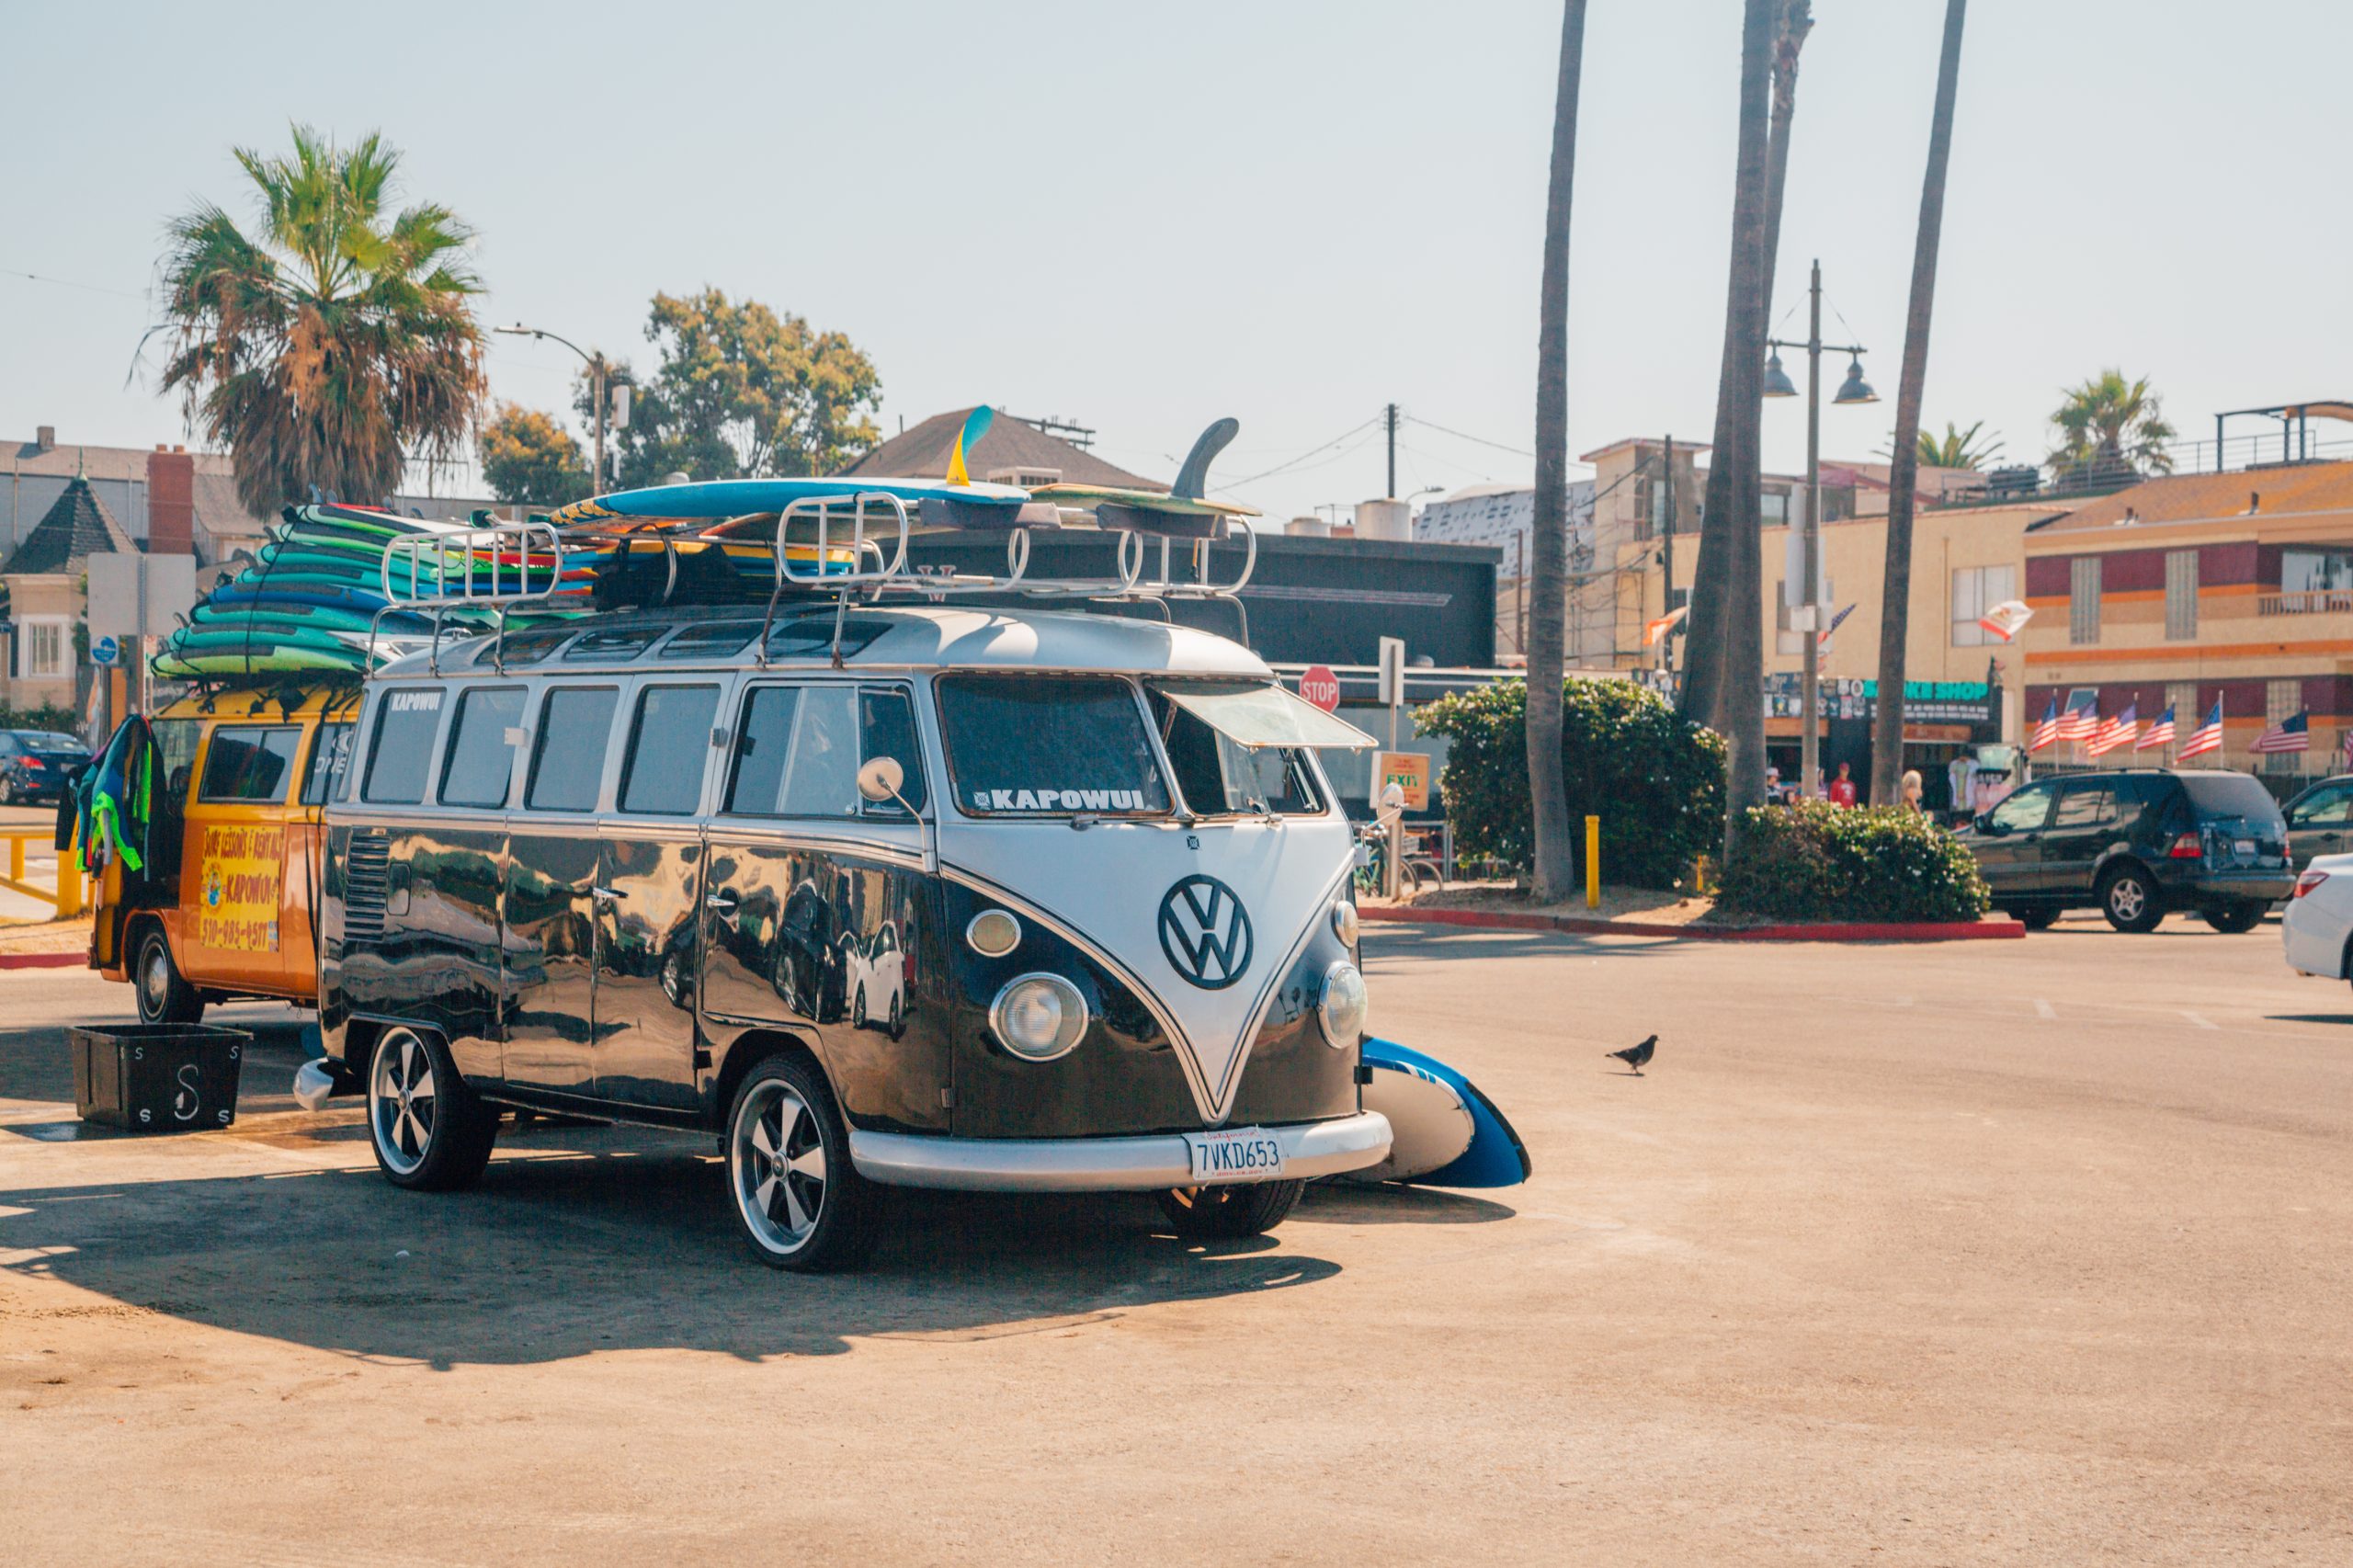 VW bus with surfboards, Venice Beach